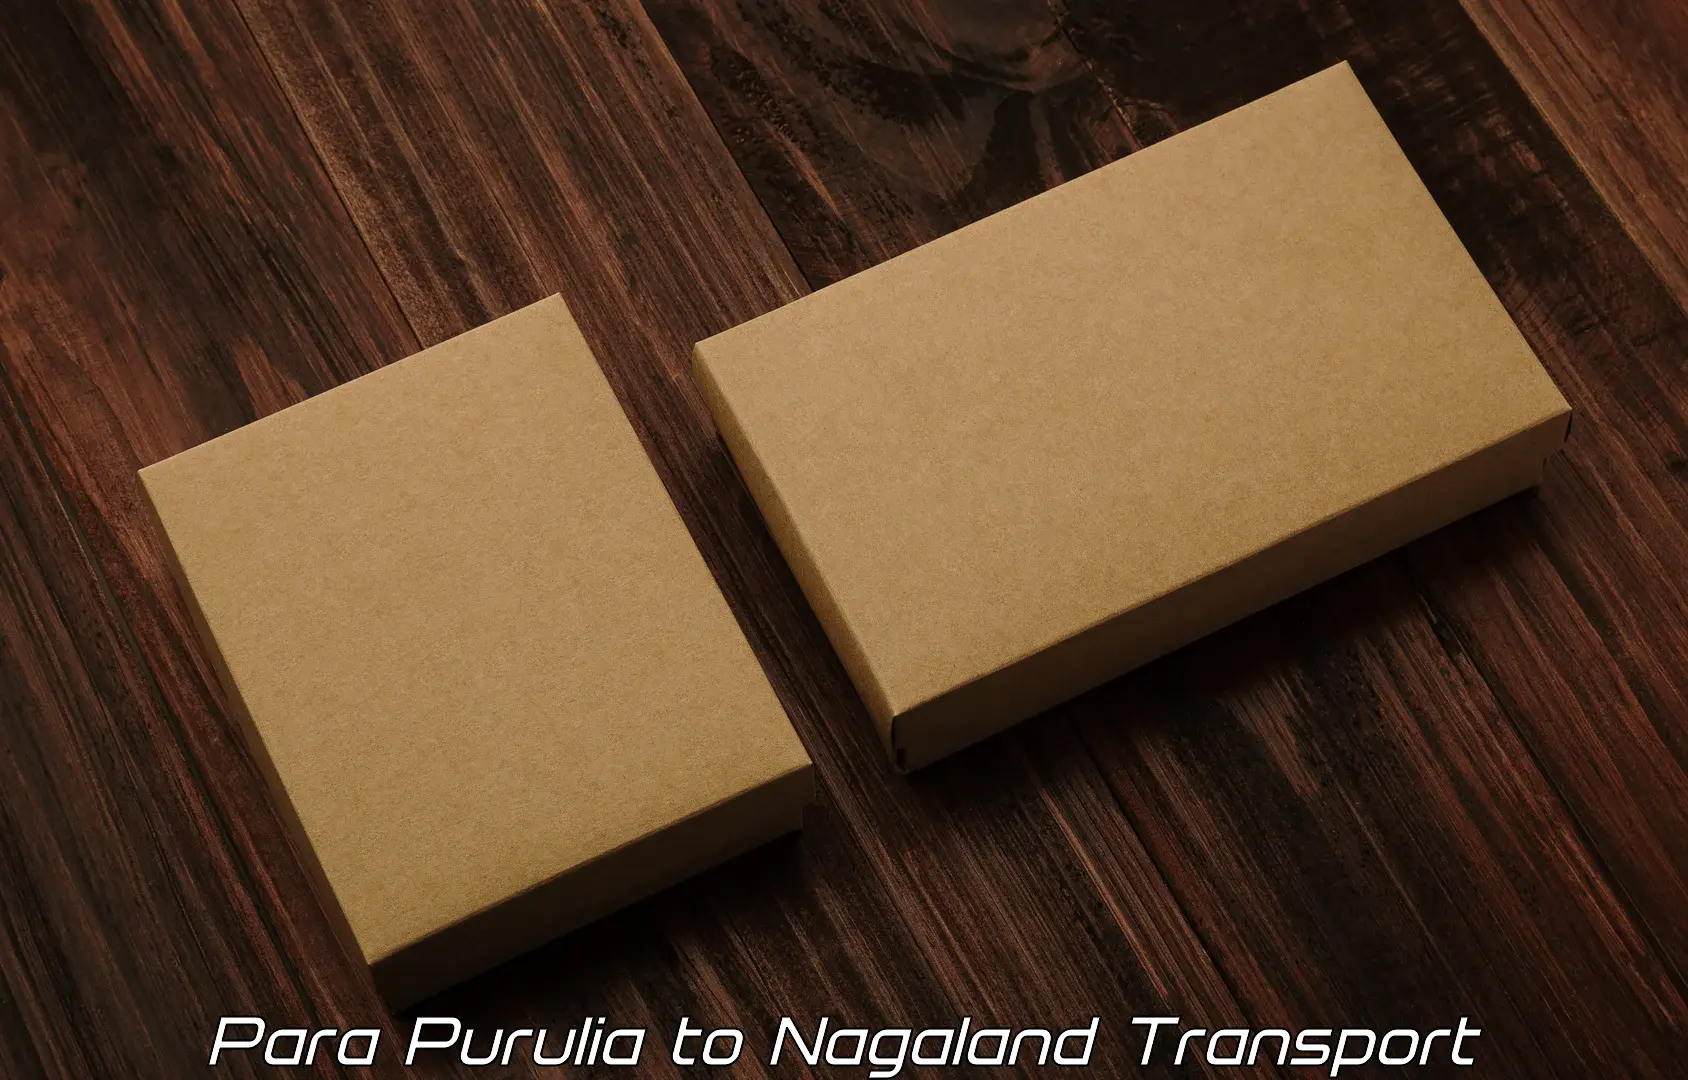 Two wheeler parcel service Para Purulia to Kohima